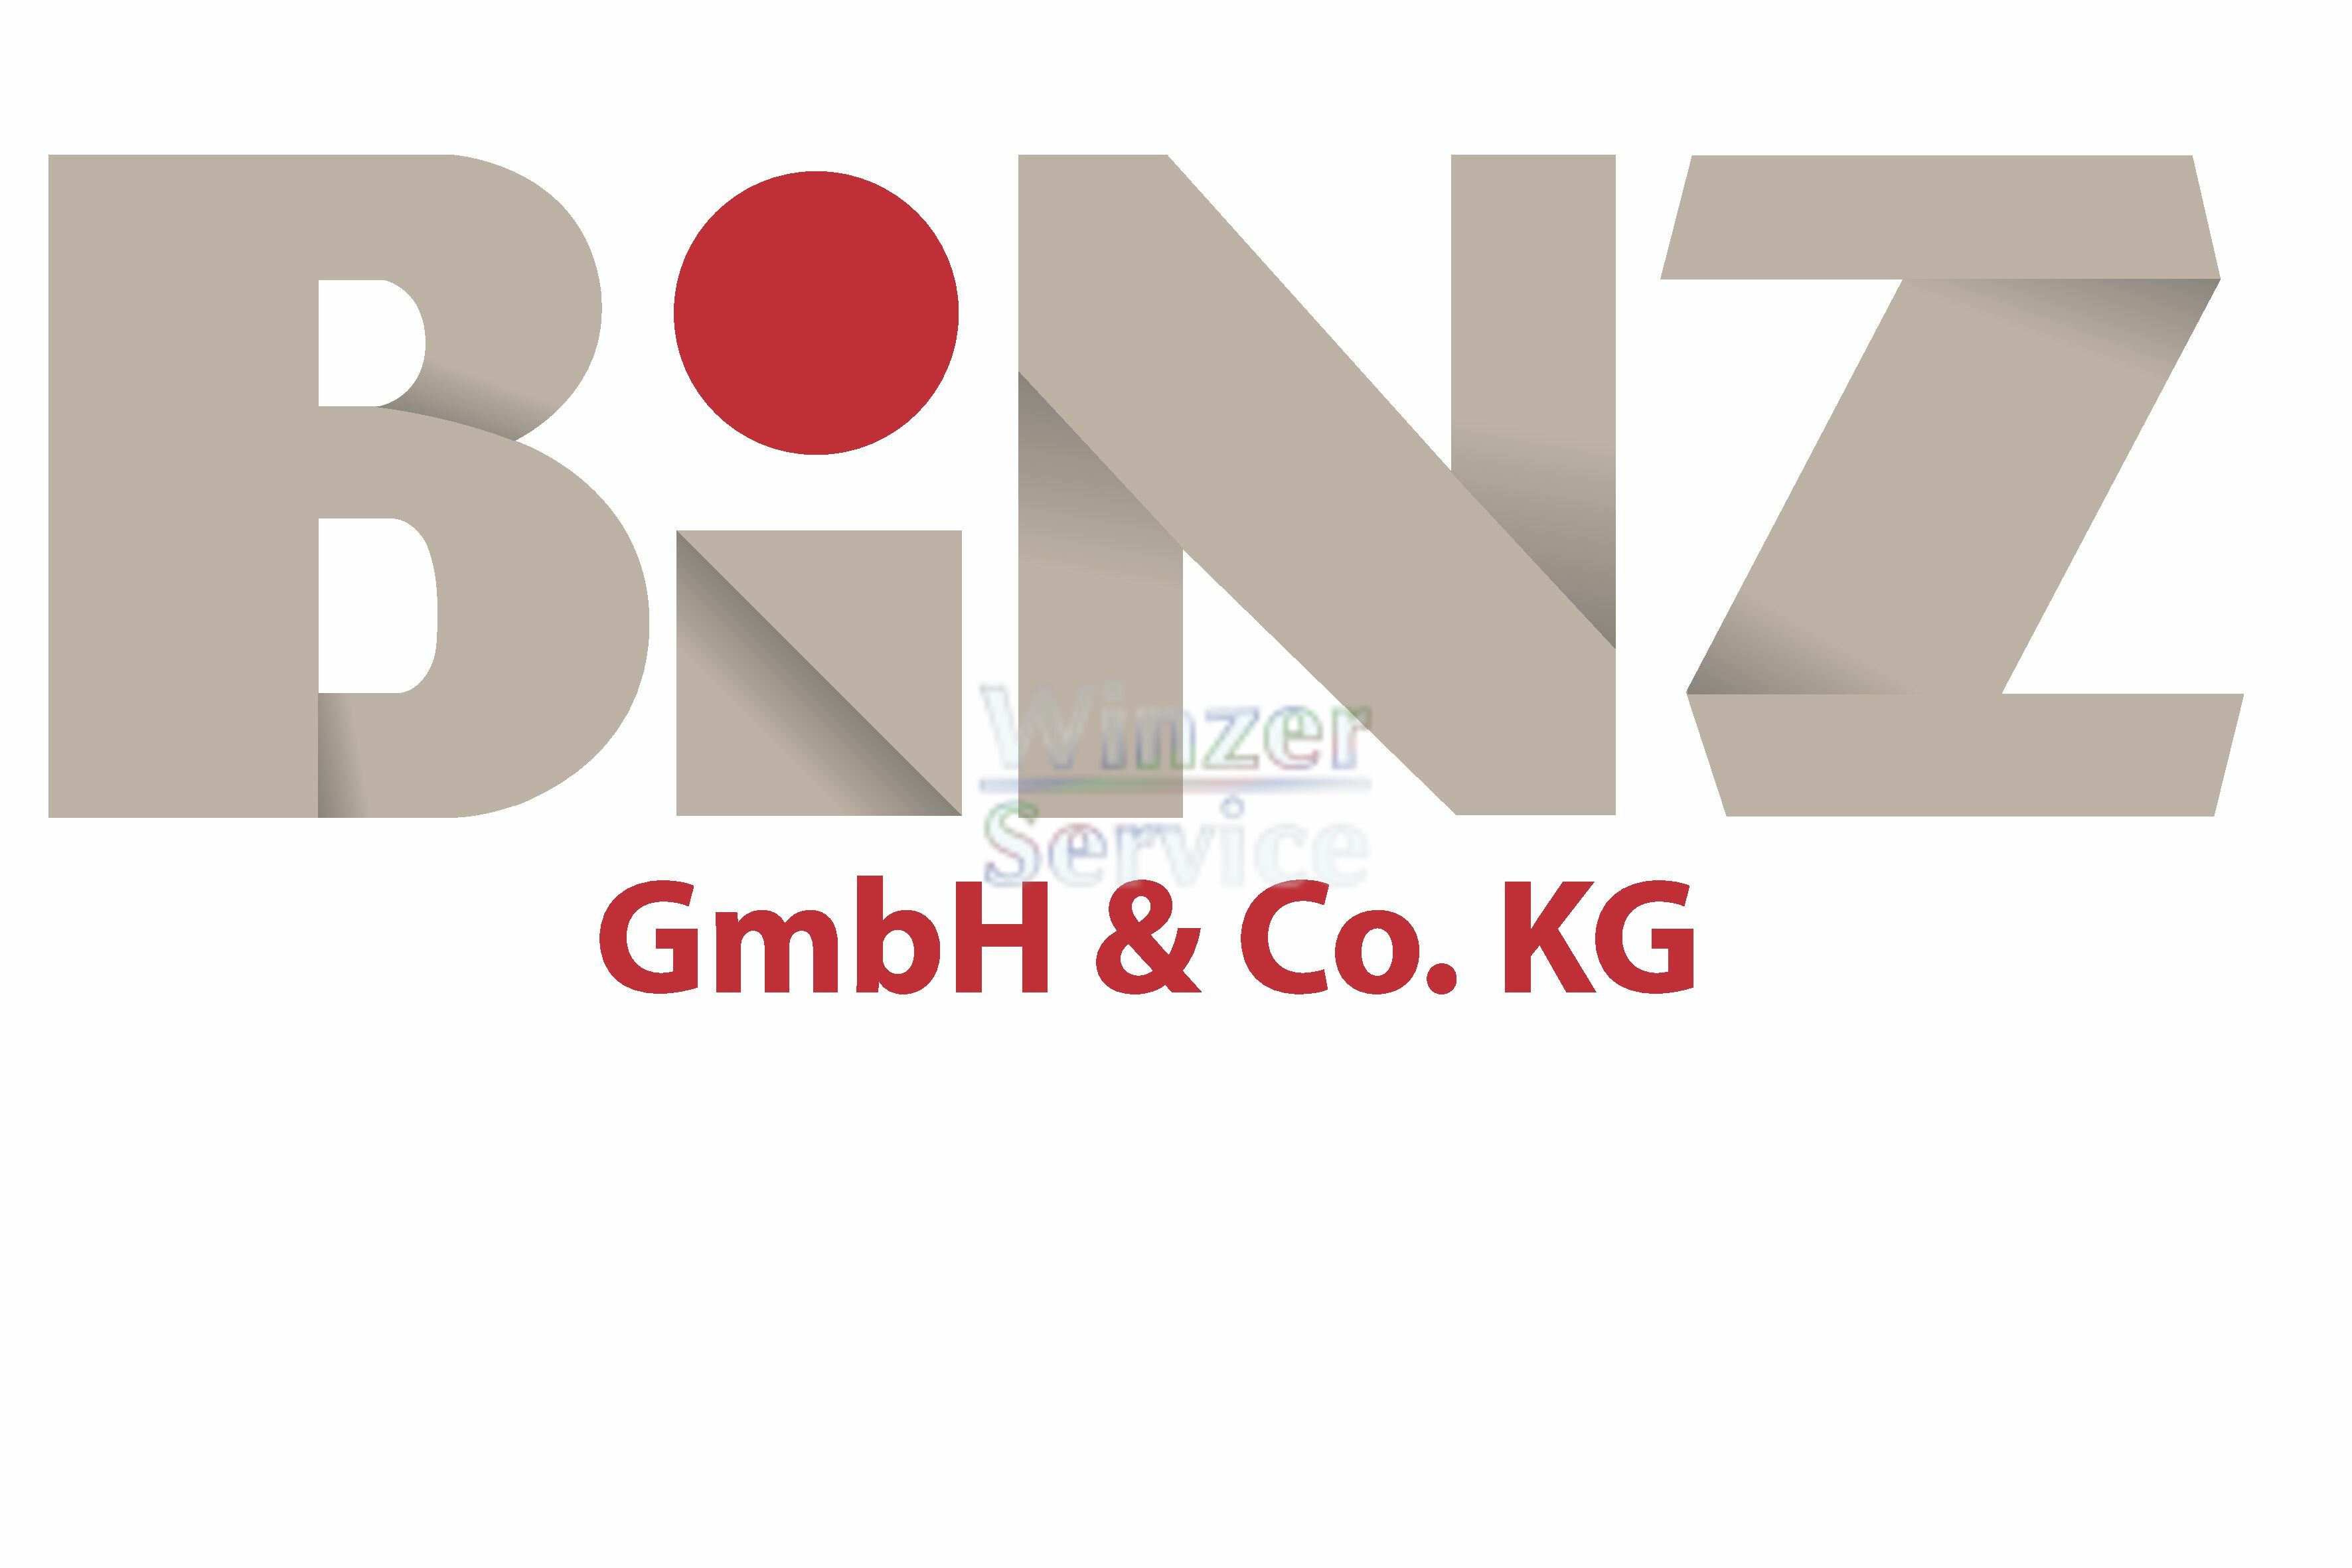 Binz GmbH & Co. KG